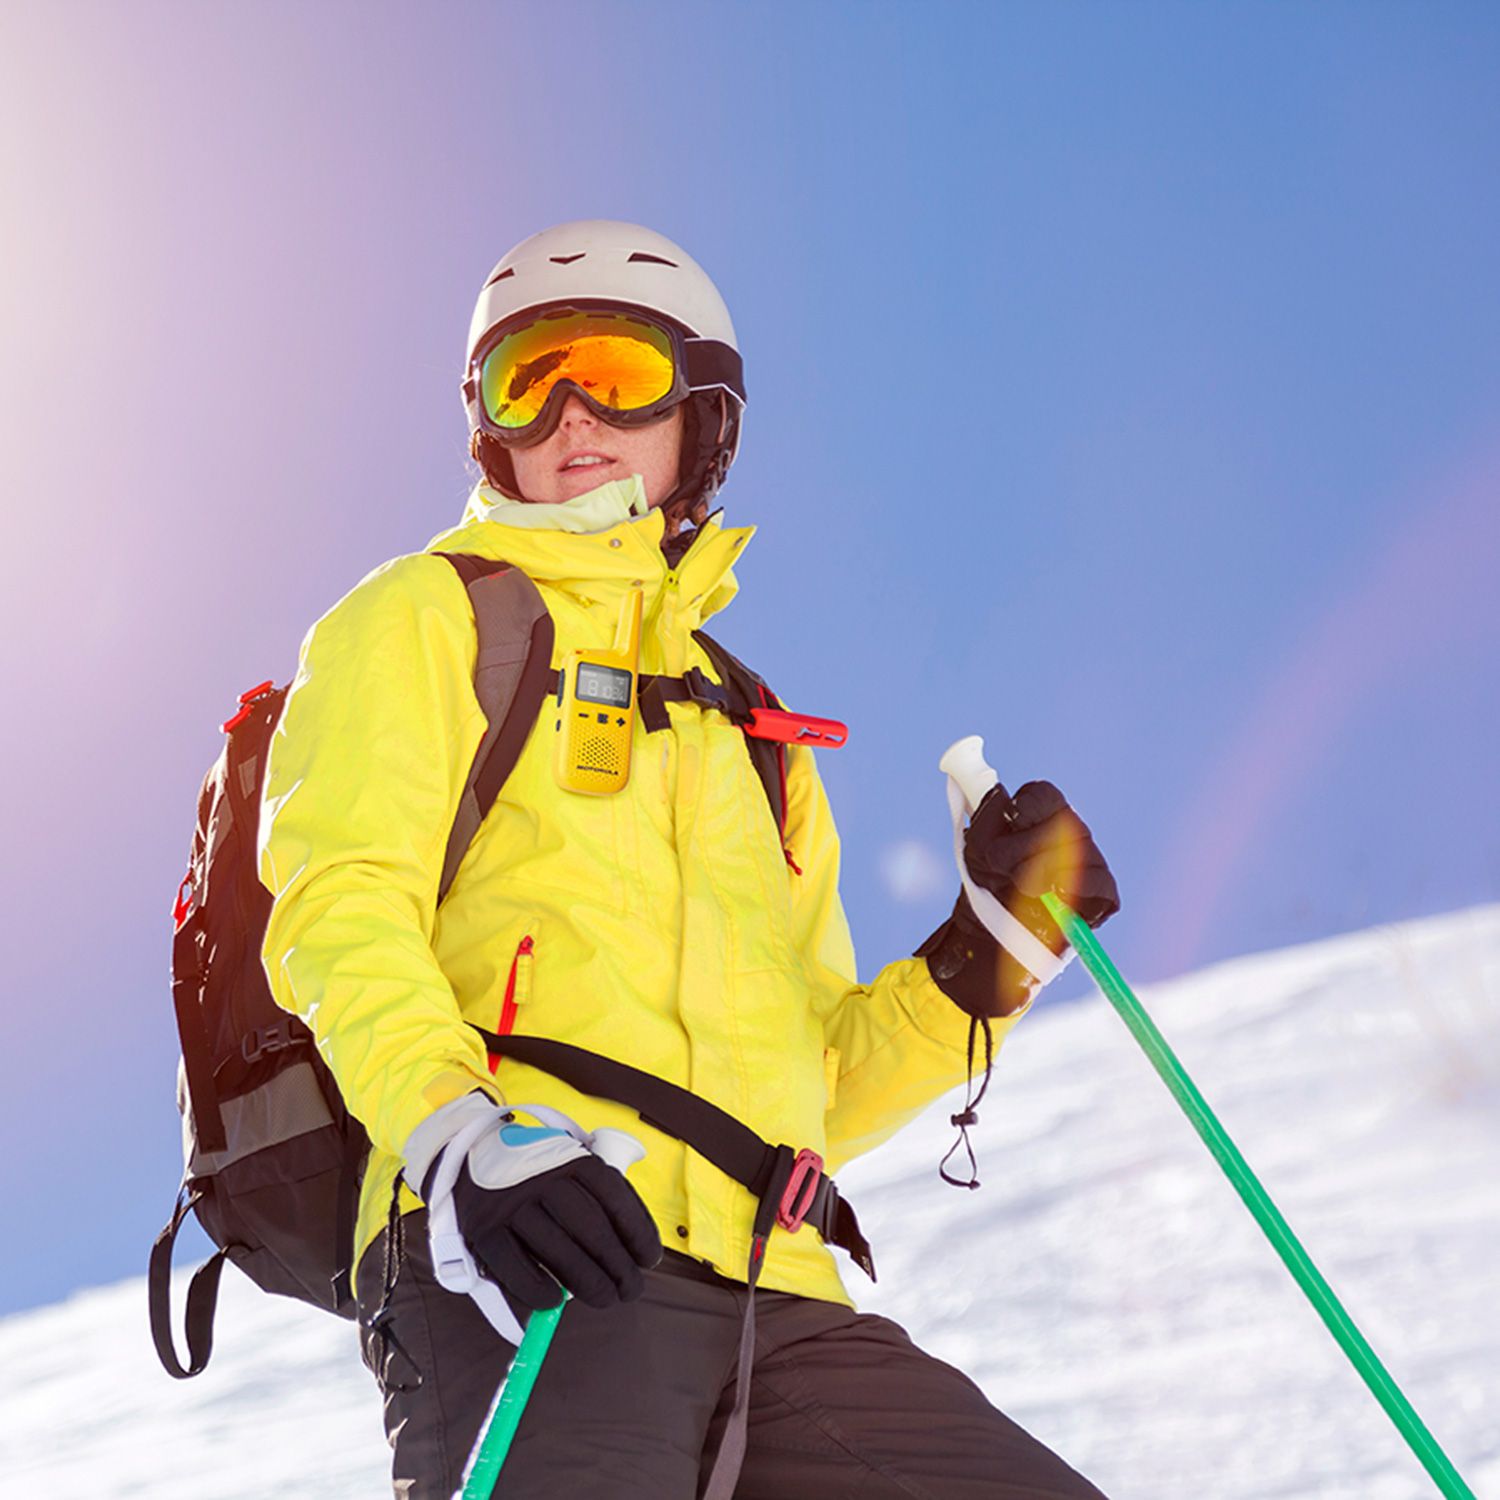 t380 (yellow) walkie talkie on woman skiing